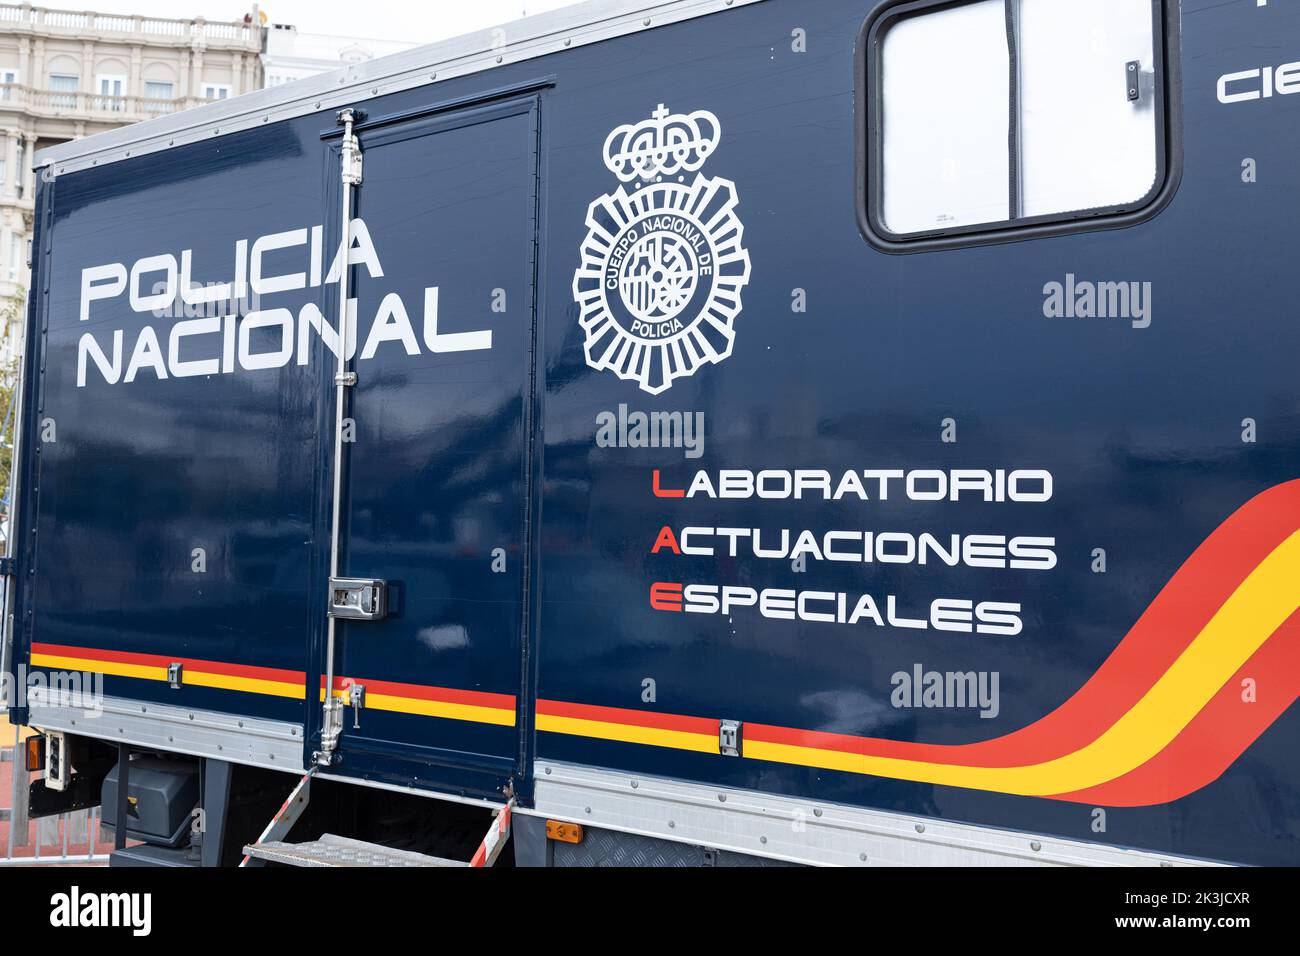 La Coruna, Spain; september 23, 2022: La Coruna, Spain; september 23, 2022: Policia Nacional Labotatorio Actuaciones Especiales truck of Spanish Natio Stock Photo